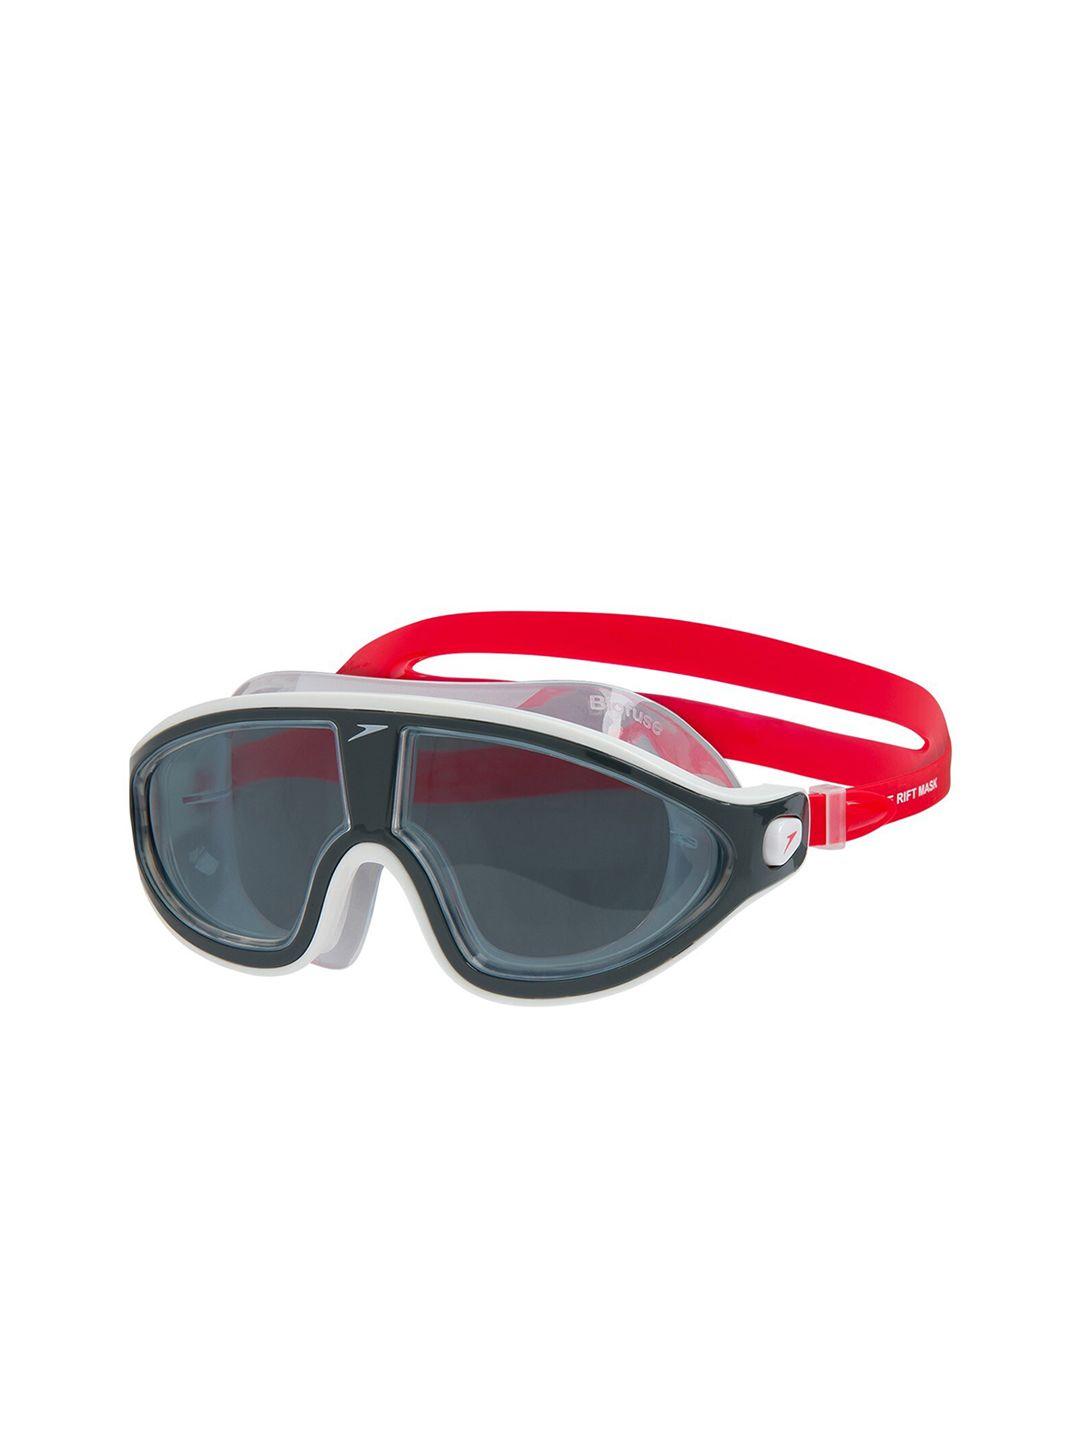 speedo black & red printed swimming  goggles